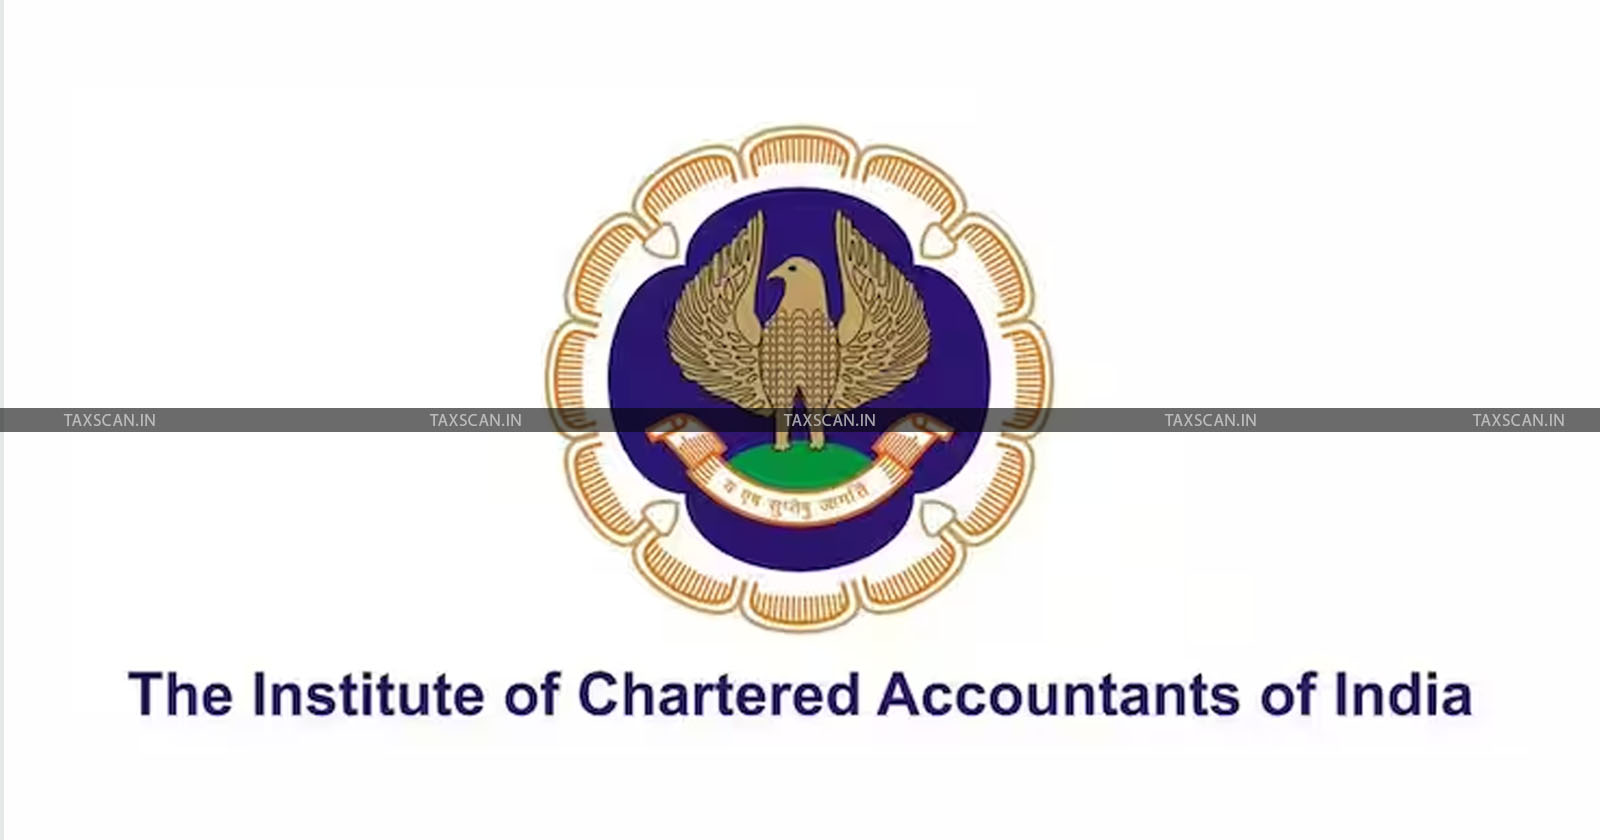 ICAI - ICAI Council Meeting - Chartered Accountants of India - ICAI decisions - ICAI Council Meeting highlights - taxscan